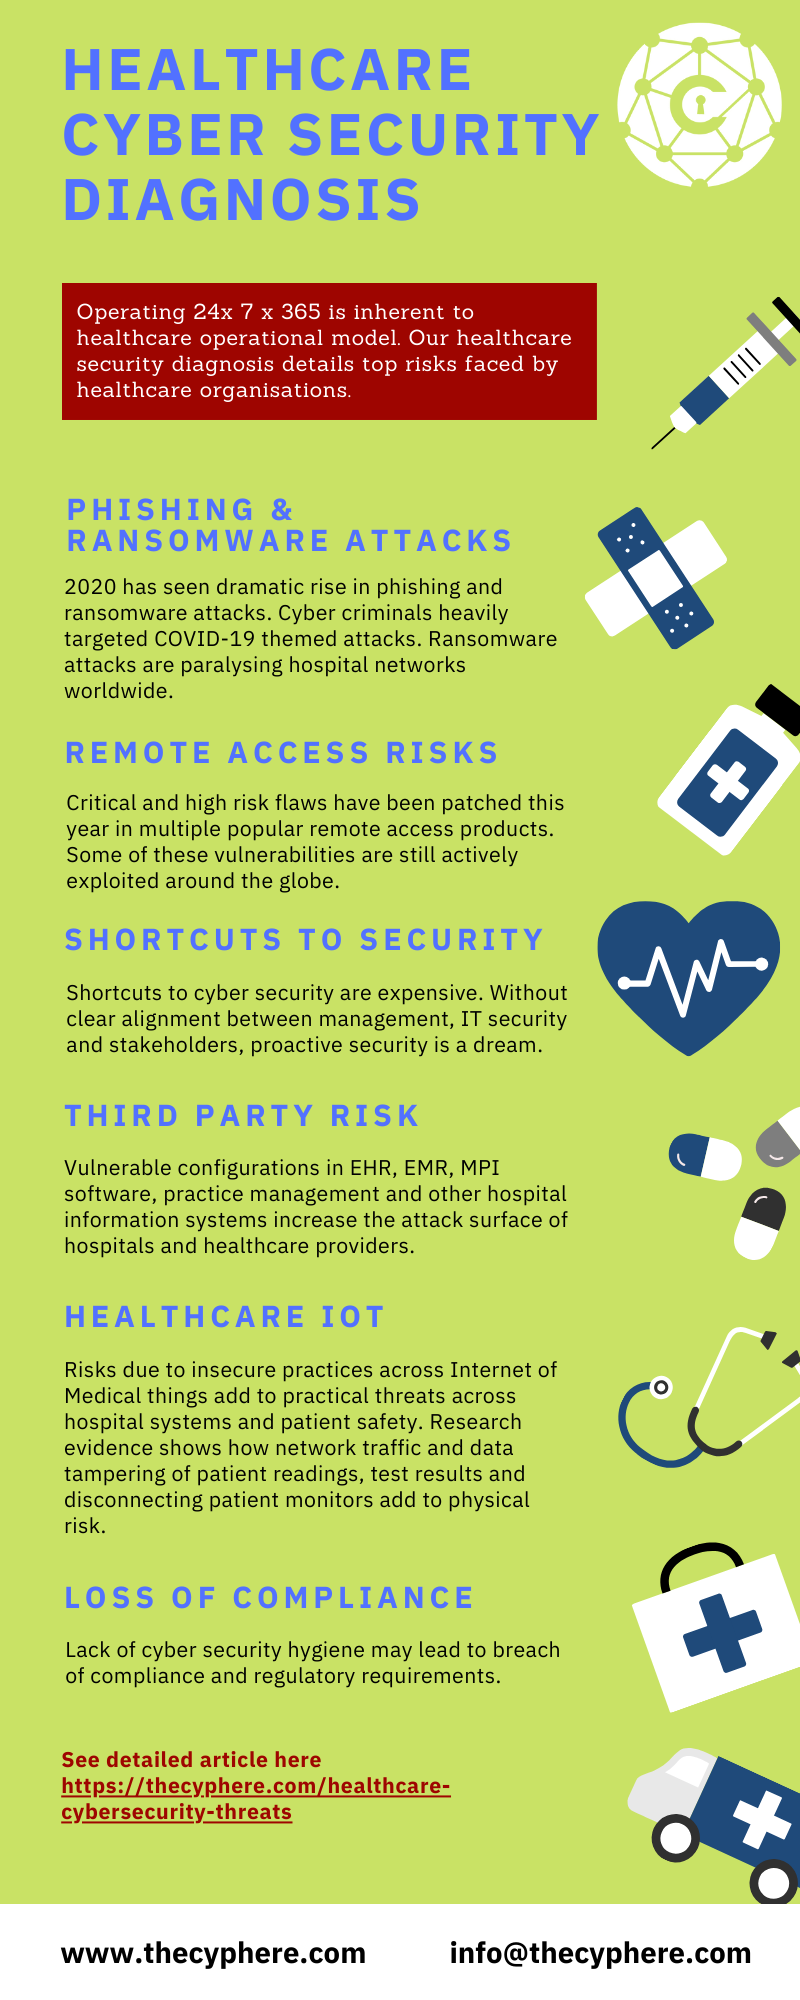 Healthcare security threats